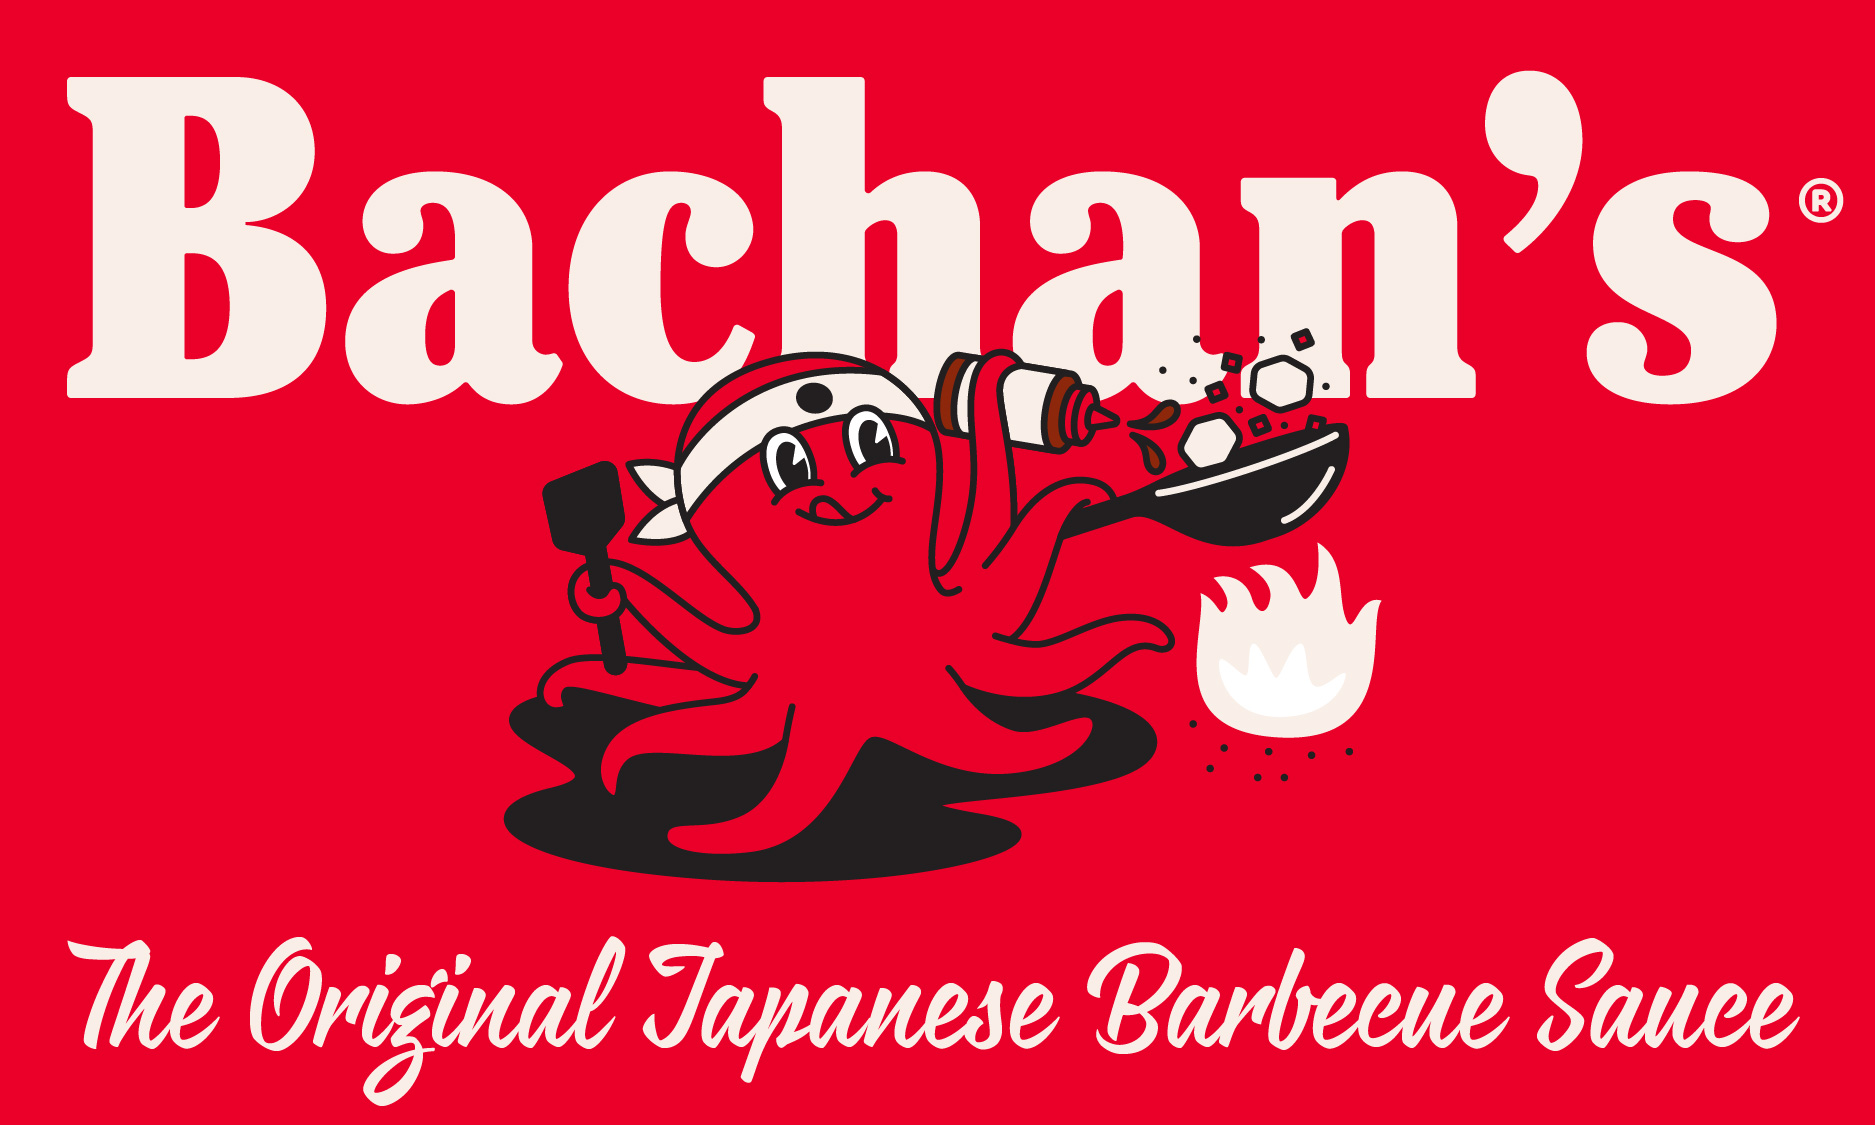 Bachan’s